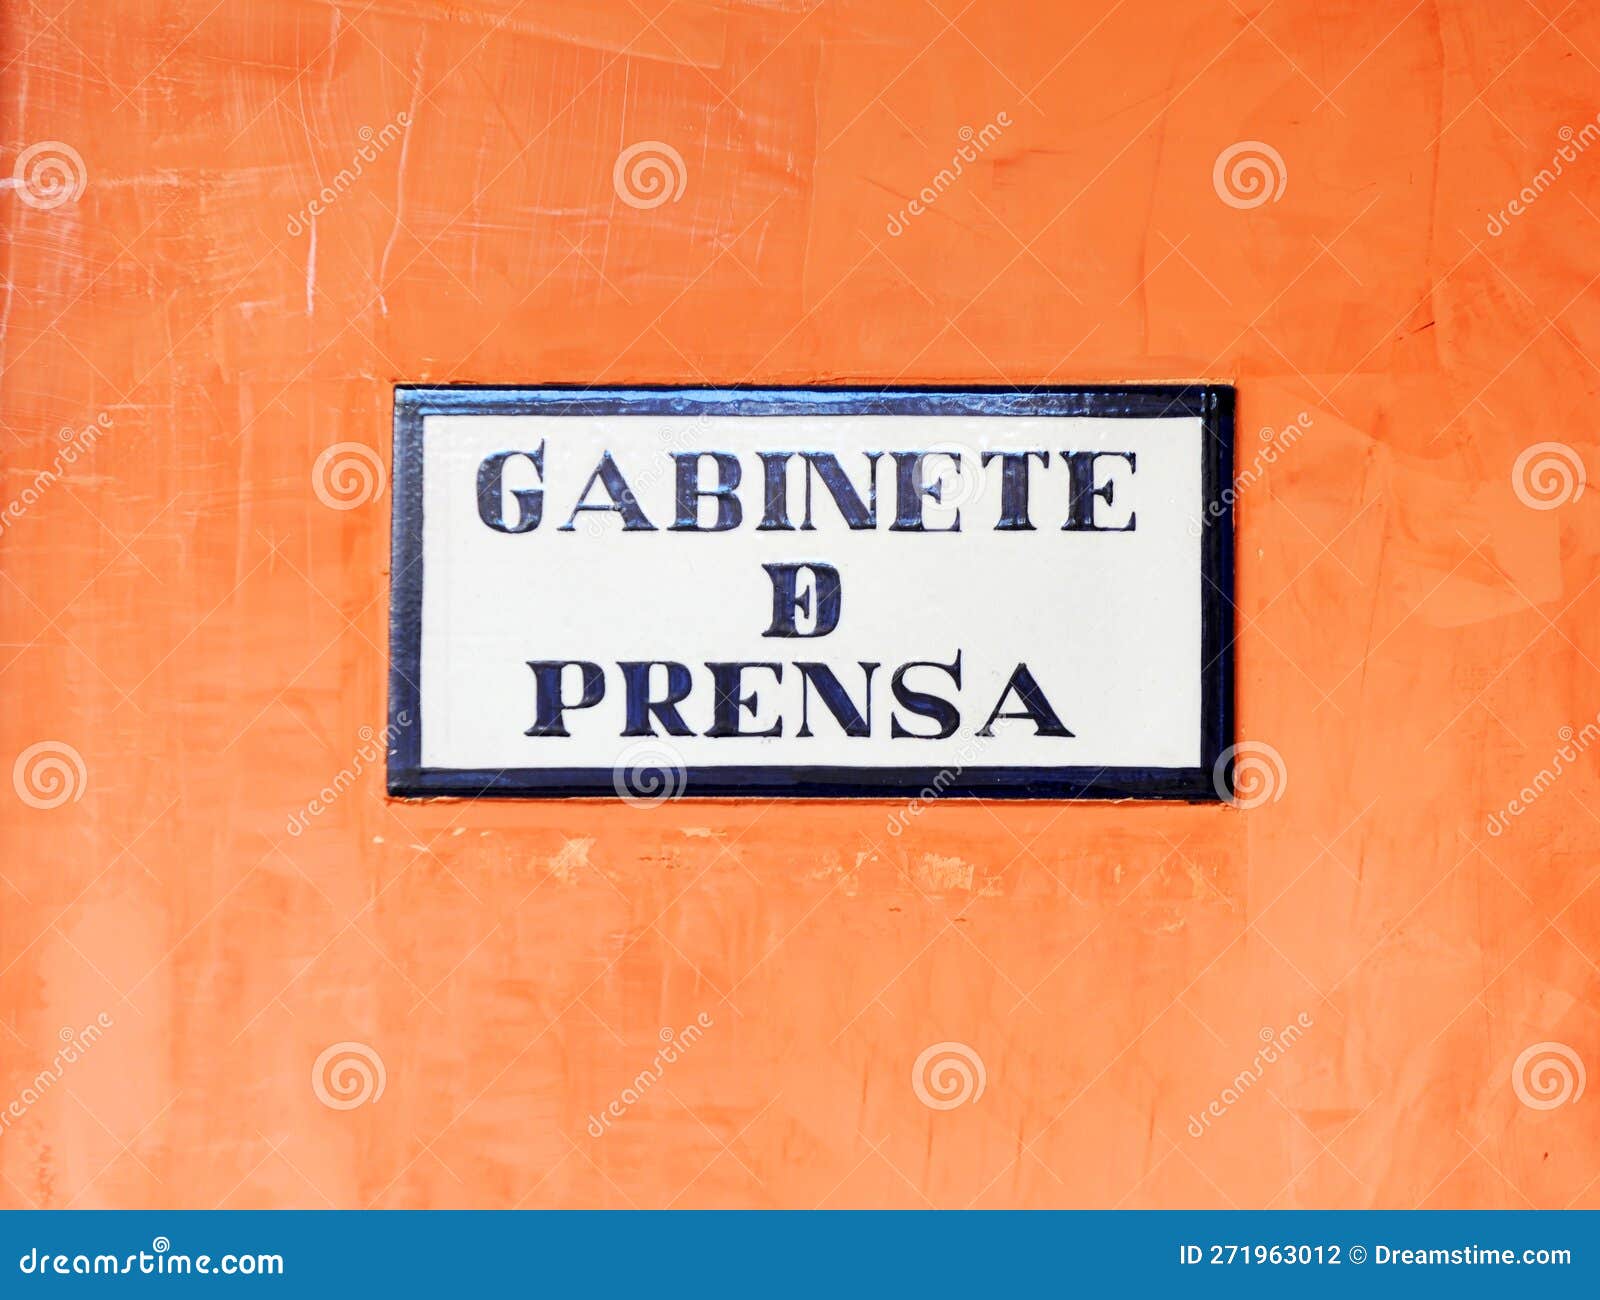 press office (gabinete de prensa). tile in spanish language sign